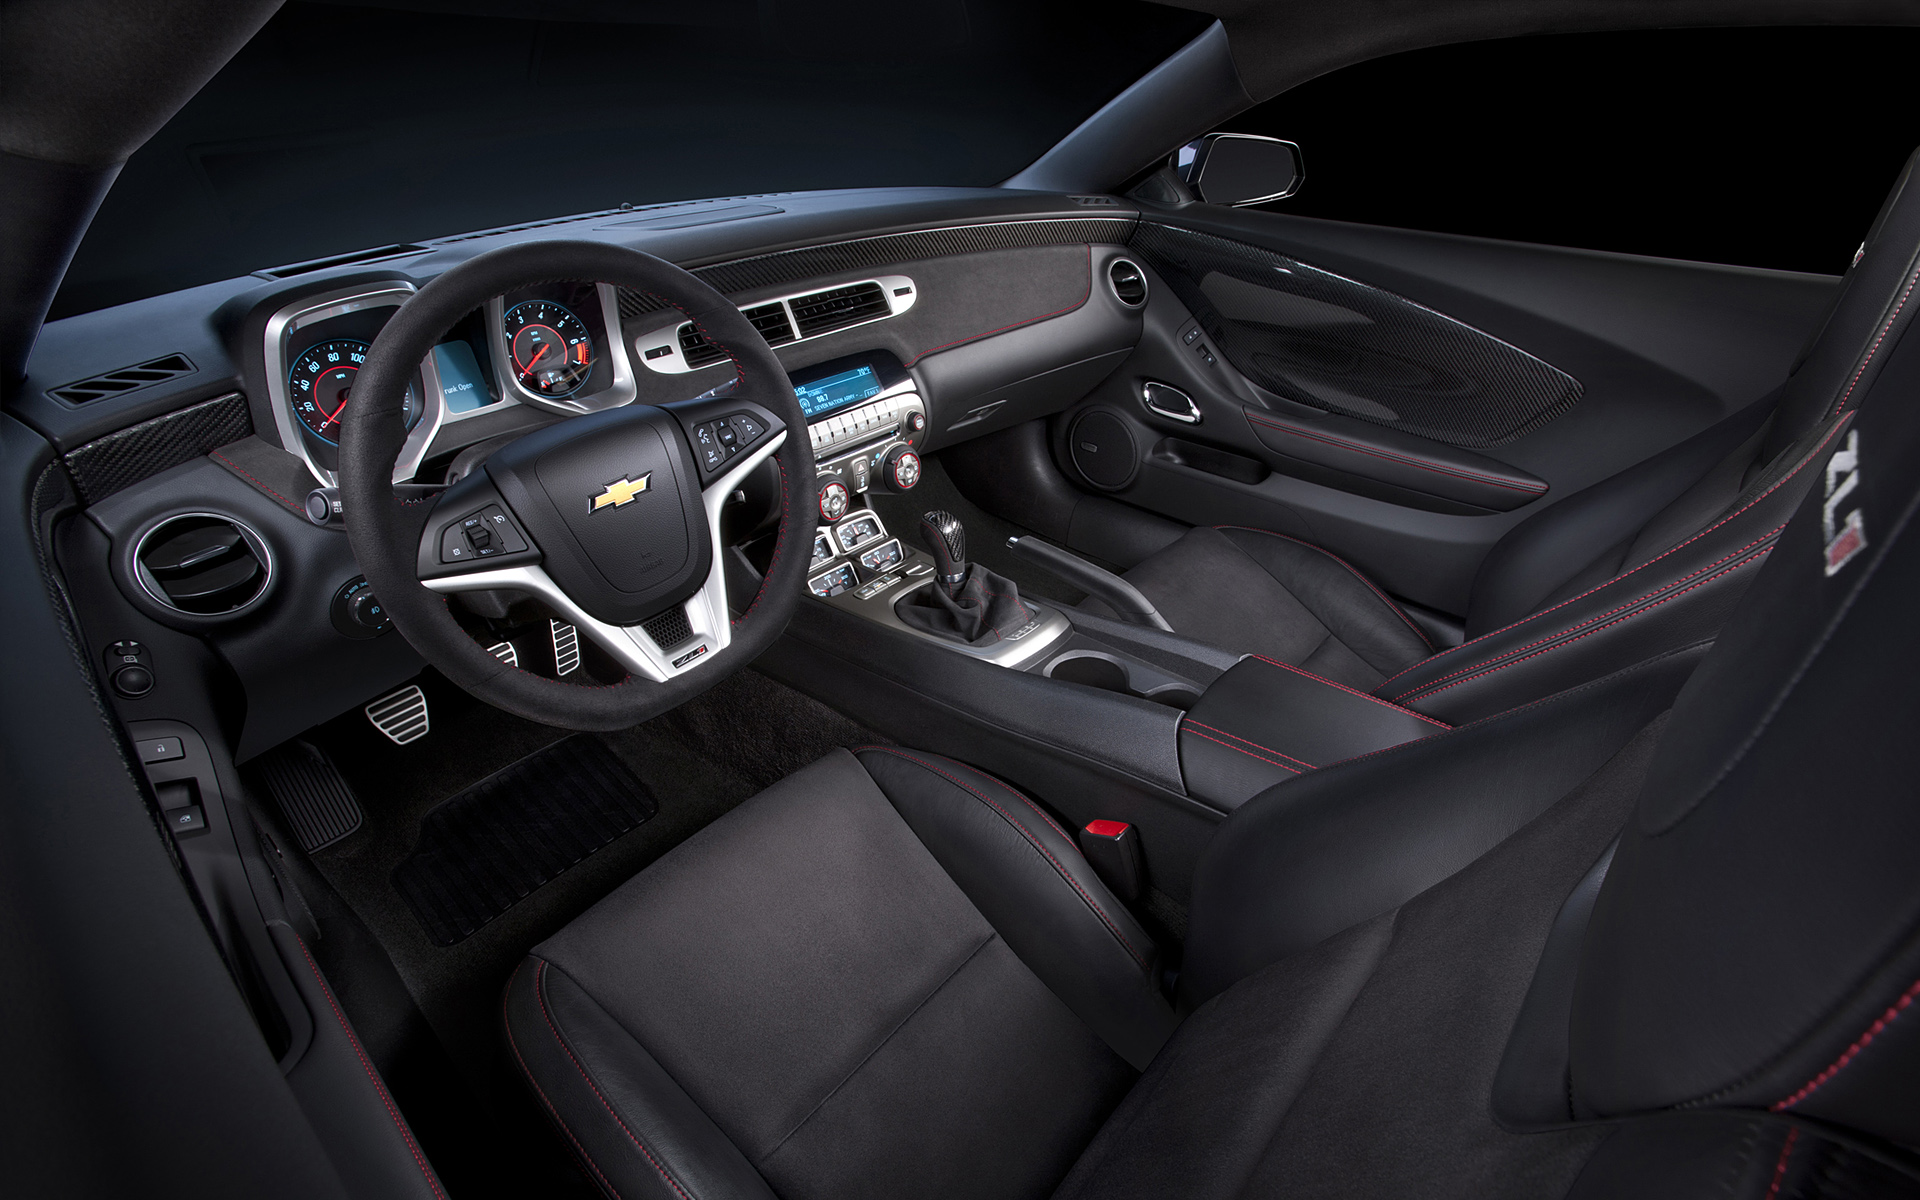  2011 Chevrolet Camaro ZL1 Carbon Concept Wallpaper.